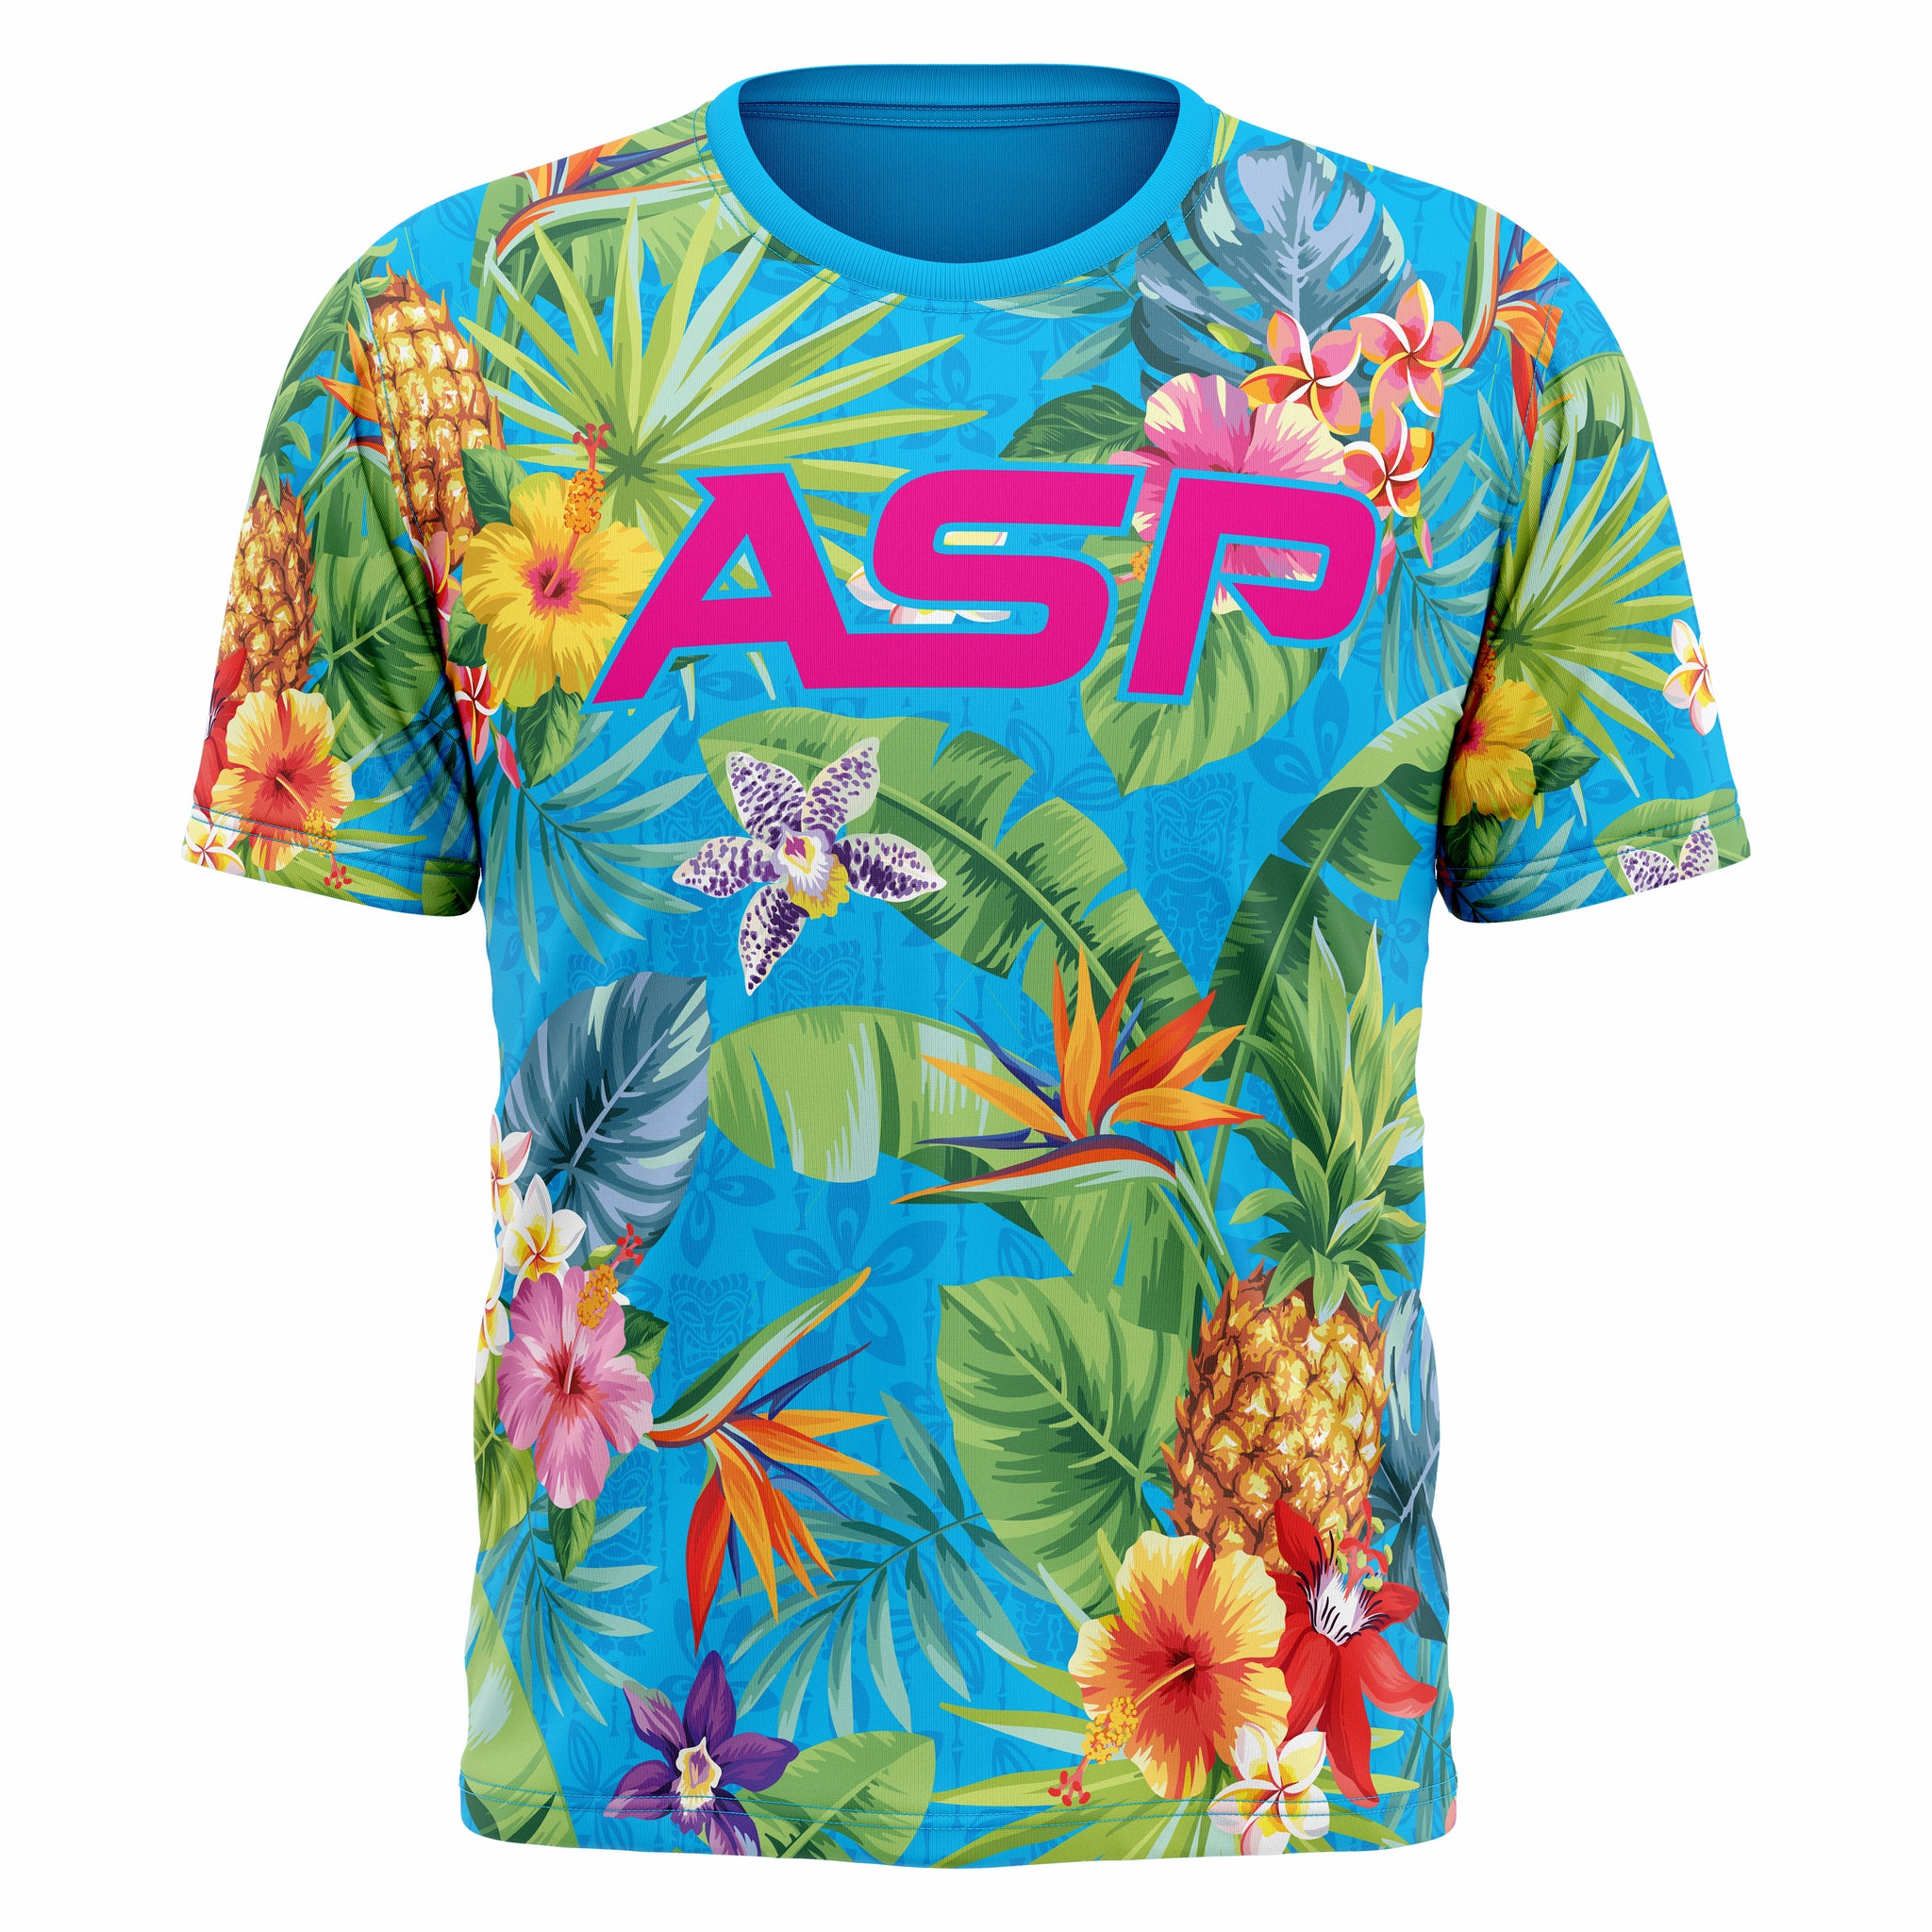 ASP Maui Short Sleeve